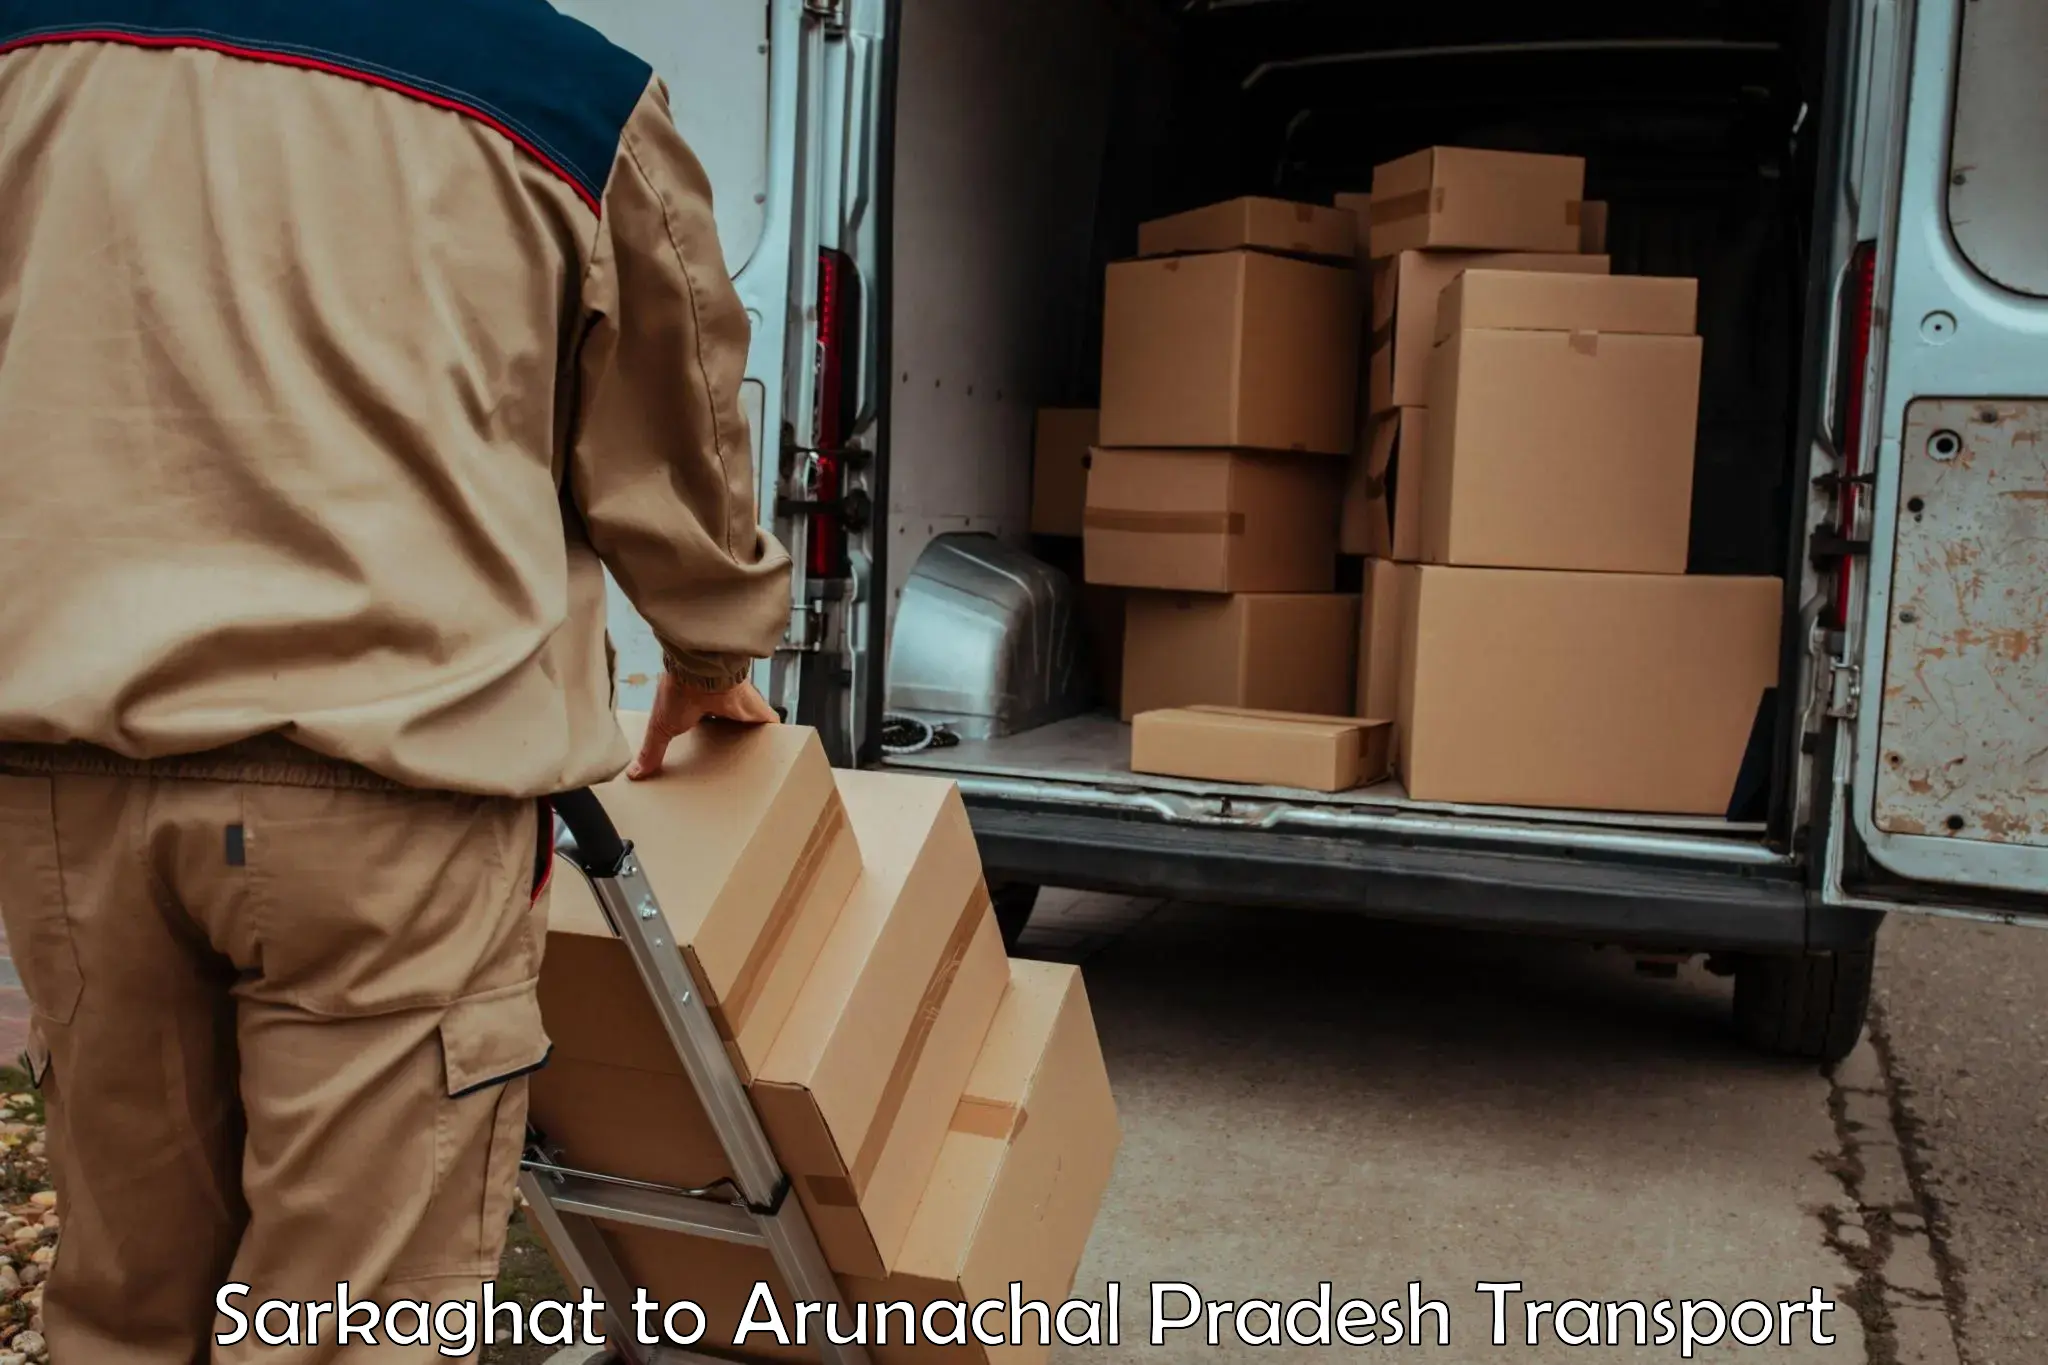 Part load transport service in India Sarkaghat to Arunachal Pradesh